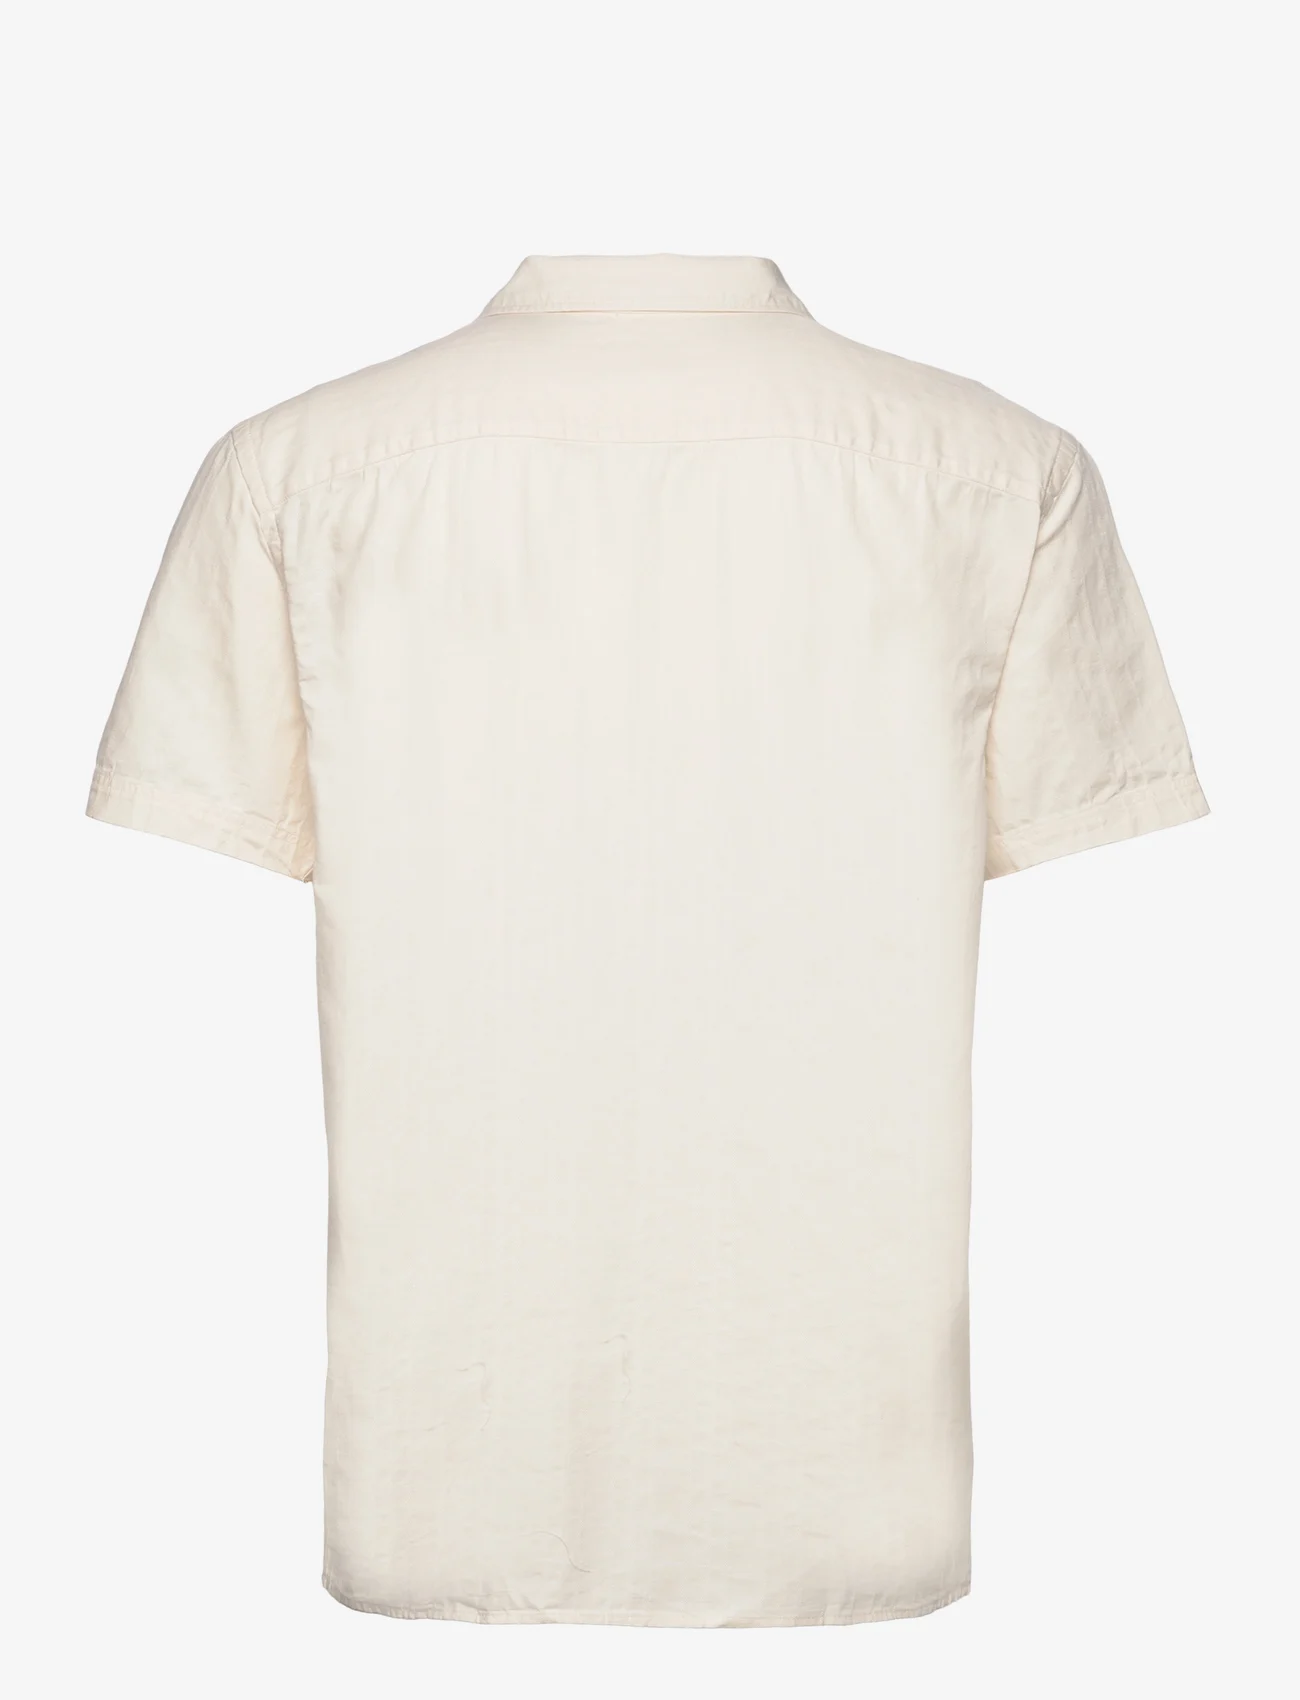 Clean Cut Copenhagen - Clean Bowling Rio S/S - short-sleeved t-shirts - ecru - 1